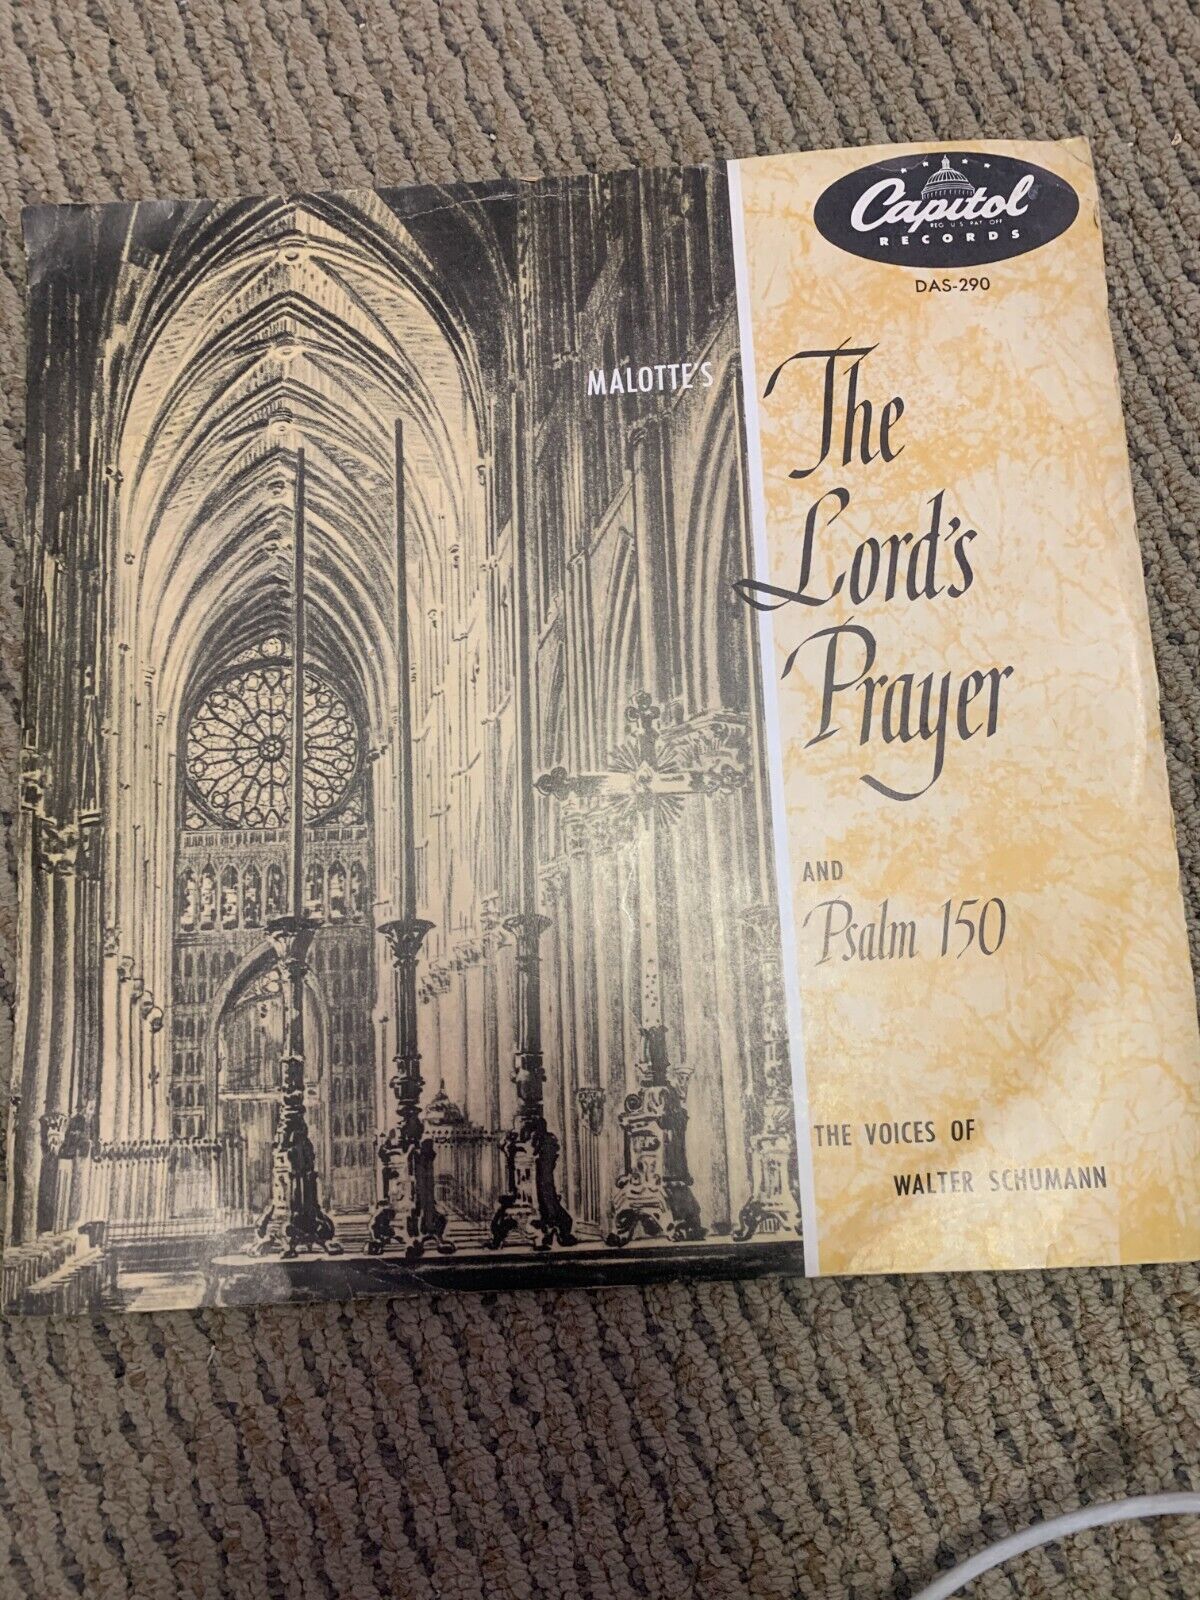 WALTER SCHUMANN THE LORDS PRAYER 78 RPM RECORD VG